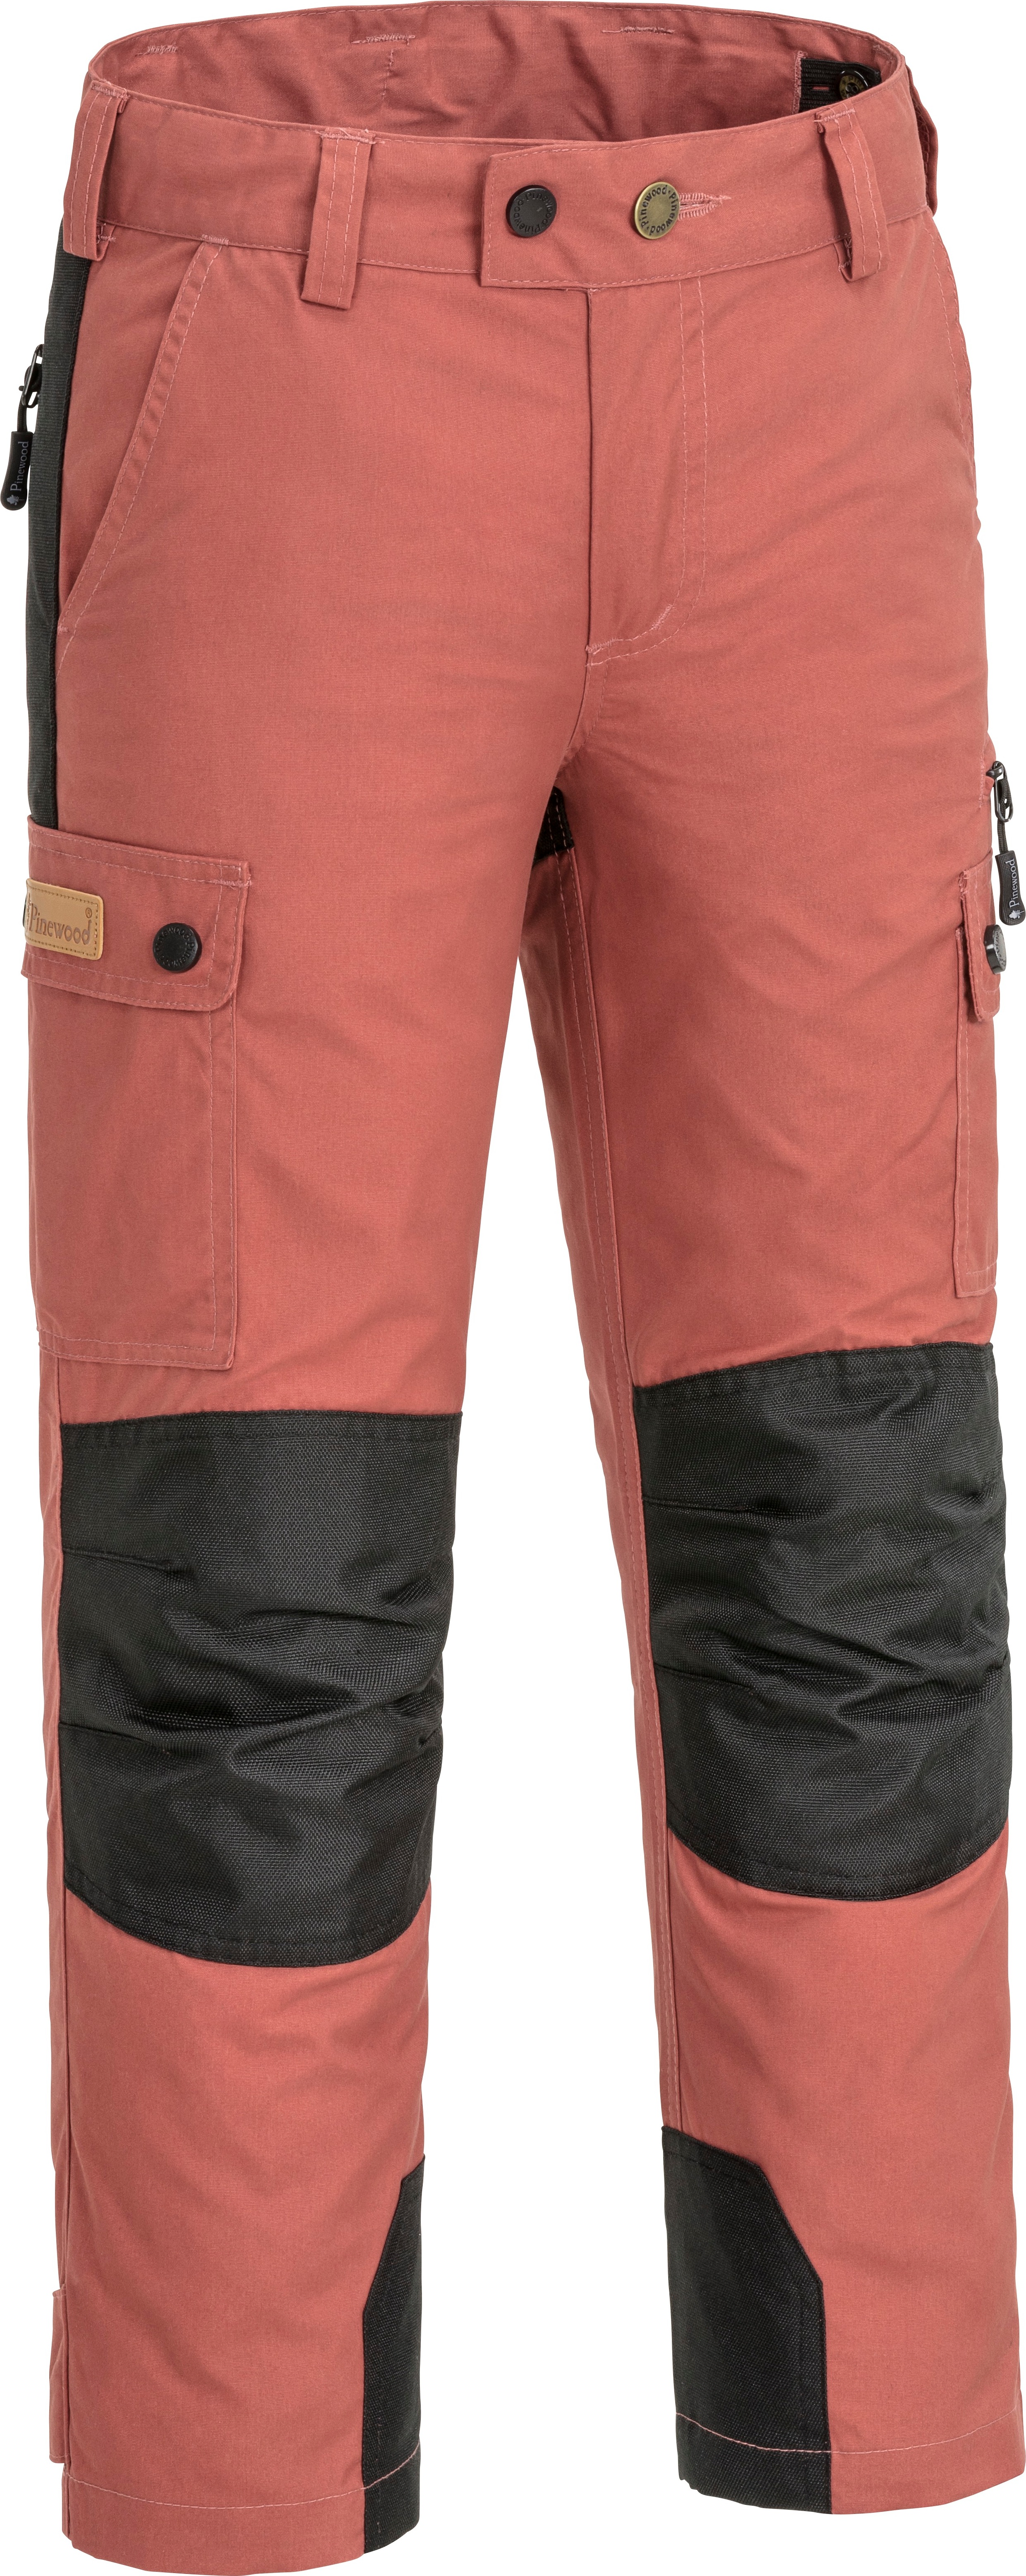 Kids’ Lappland Trousers Rusty Pink/Black